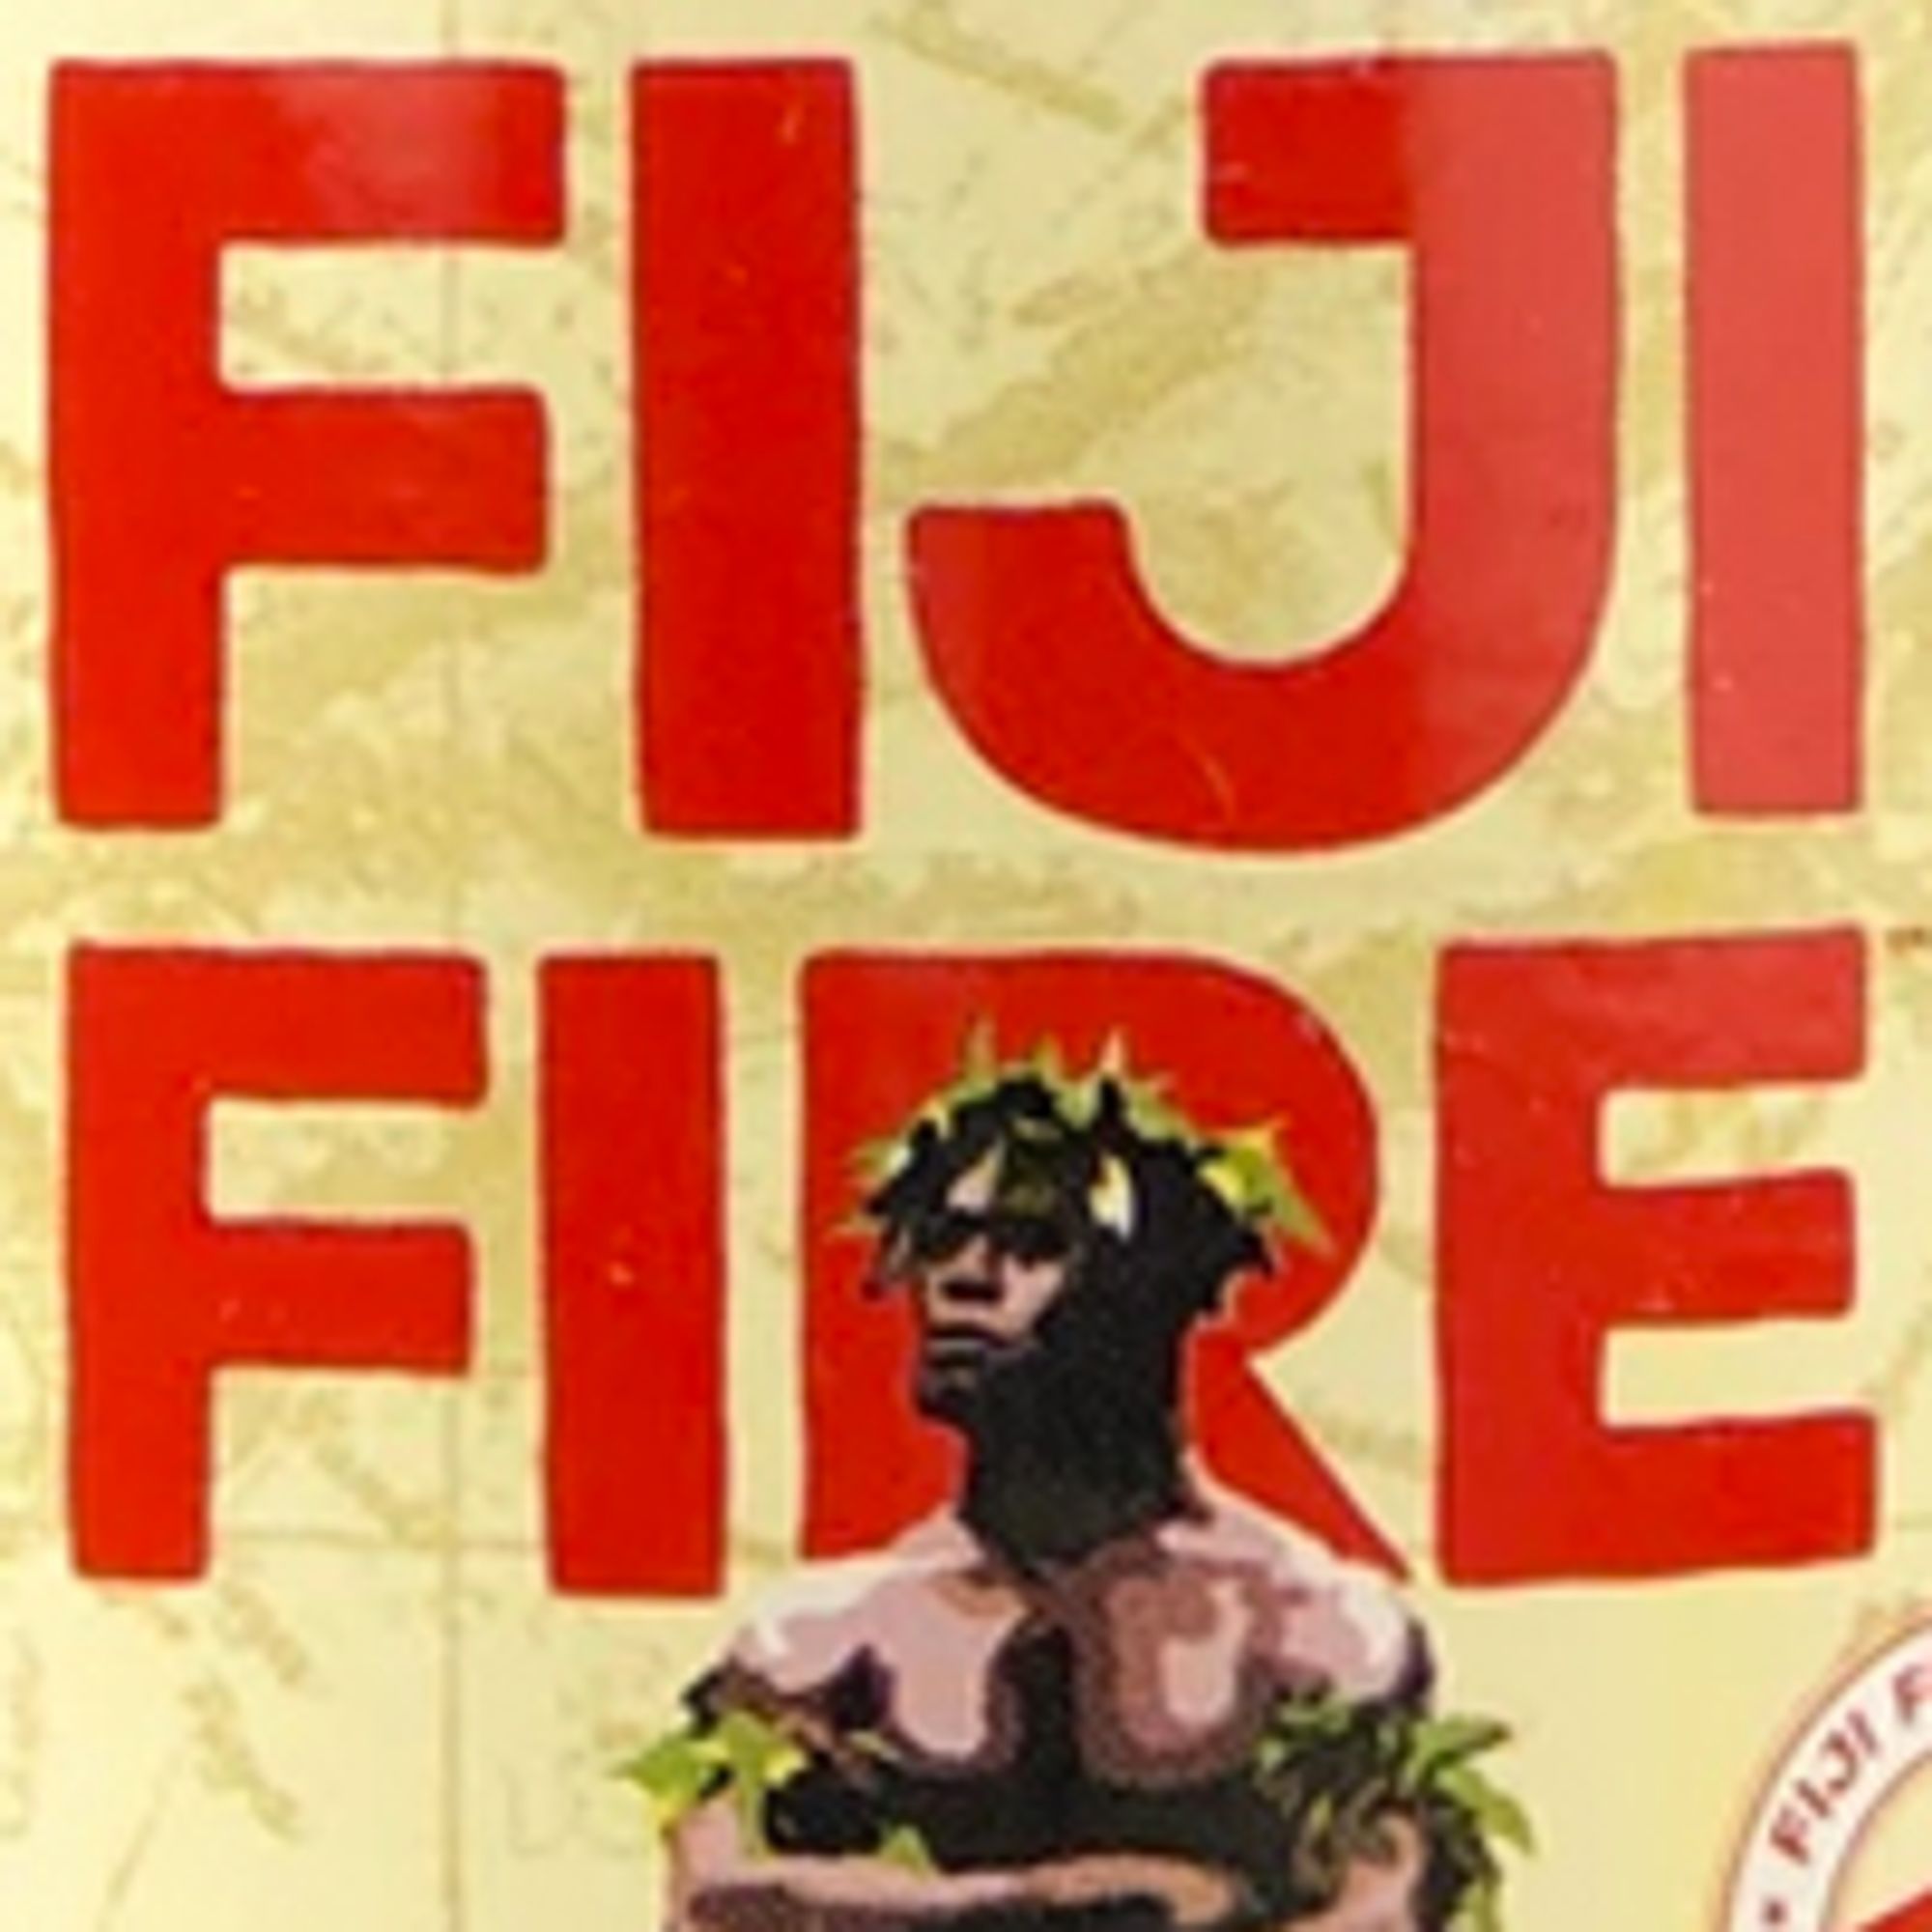 Fiji Fire